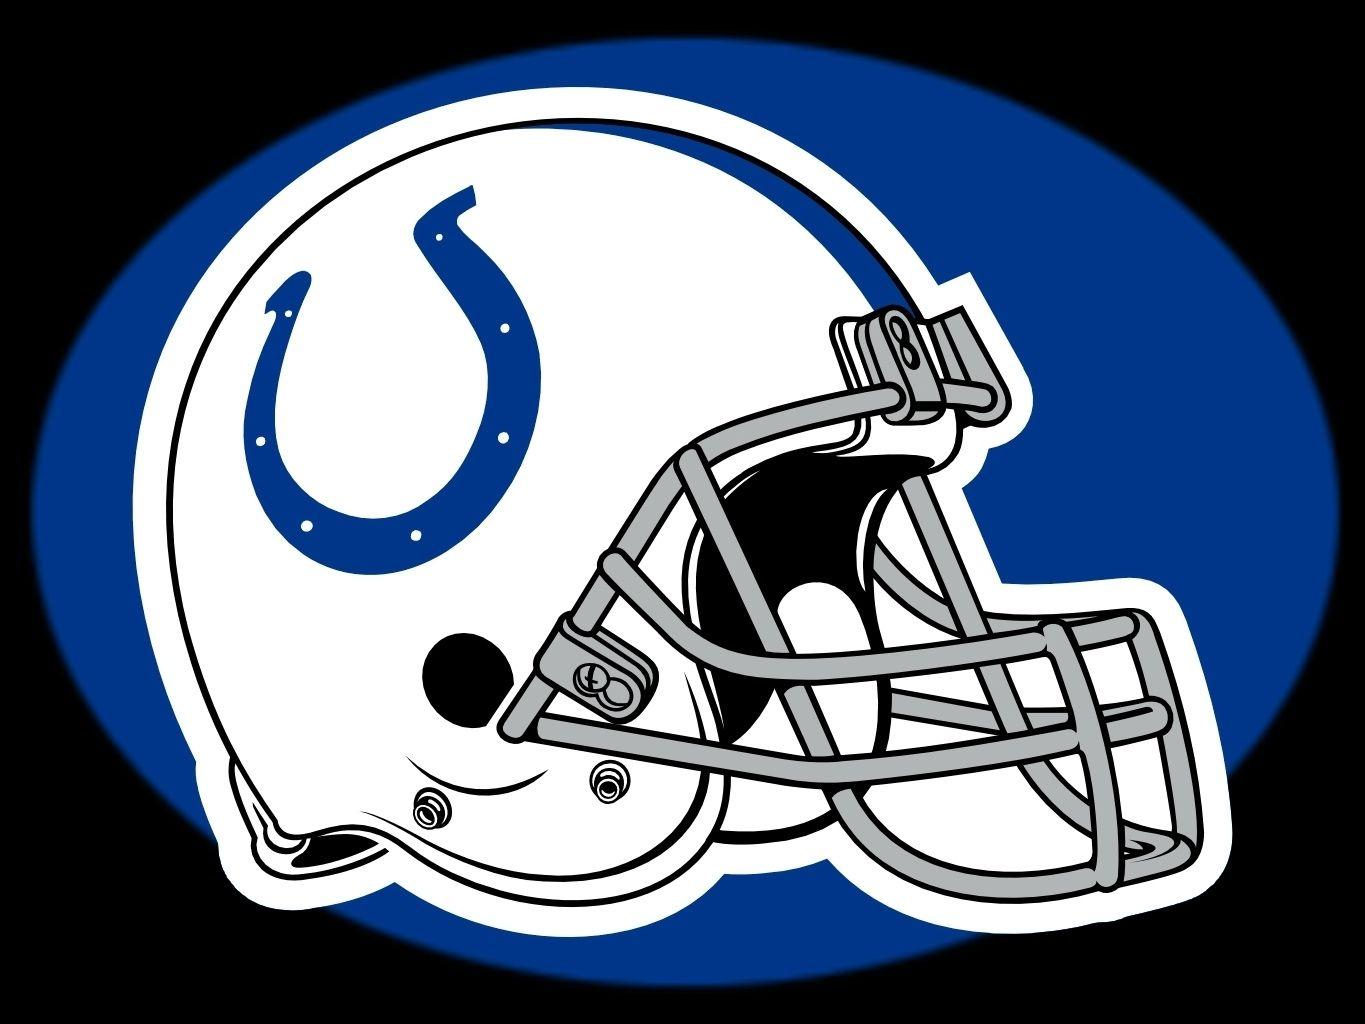 Colts Helmet Logo - Colts Helmet 2 Logo Decals 2 Corn Hole Stickers set of (2)